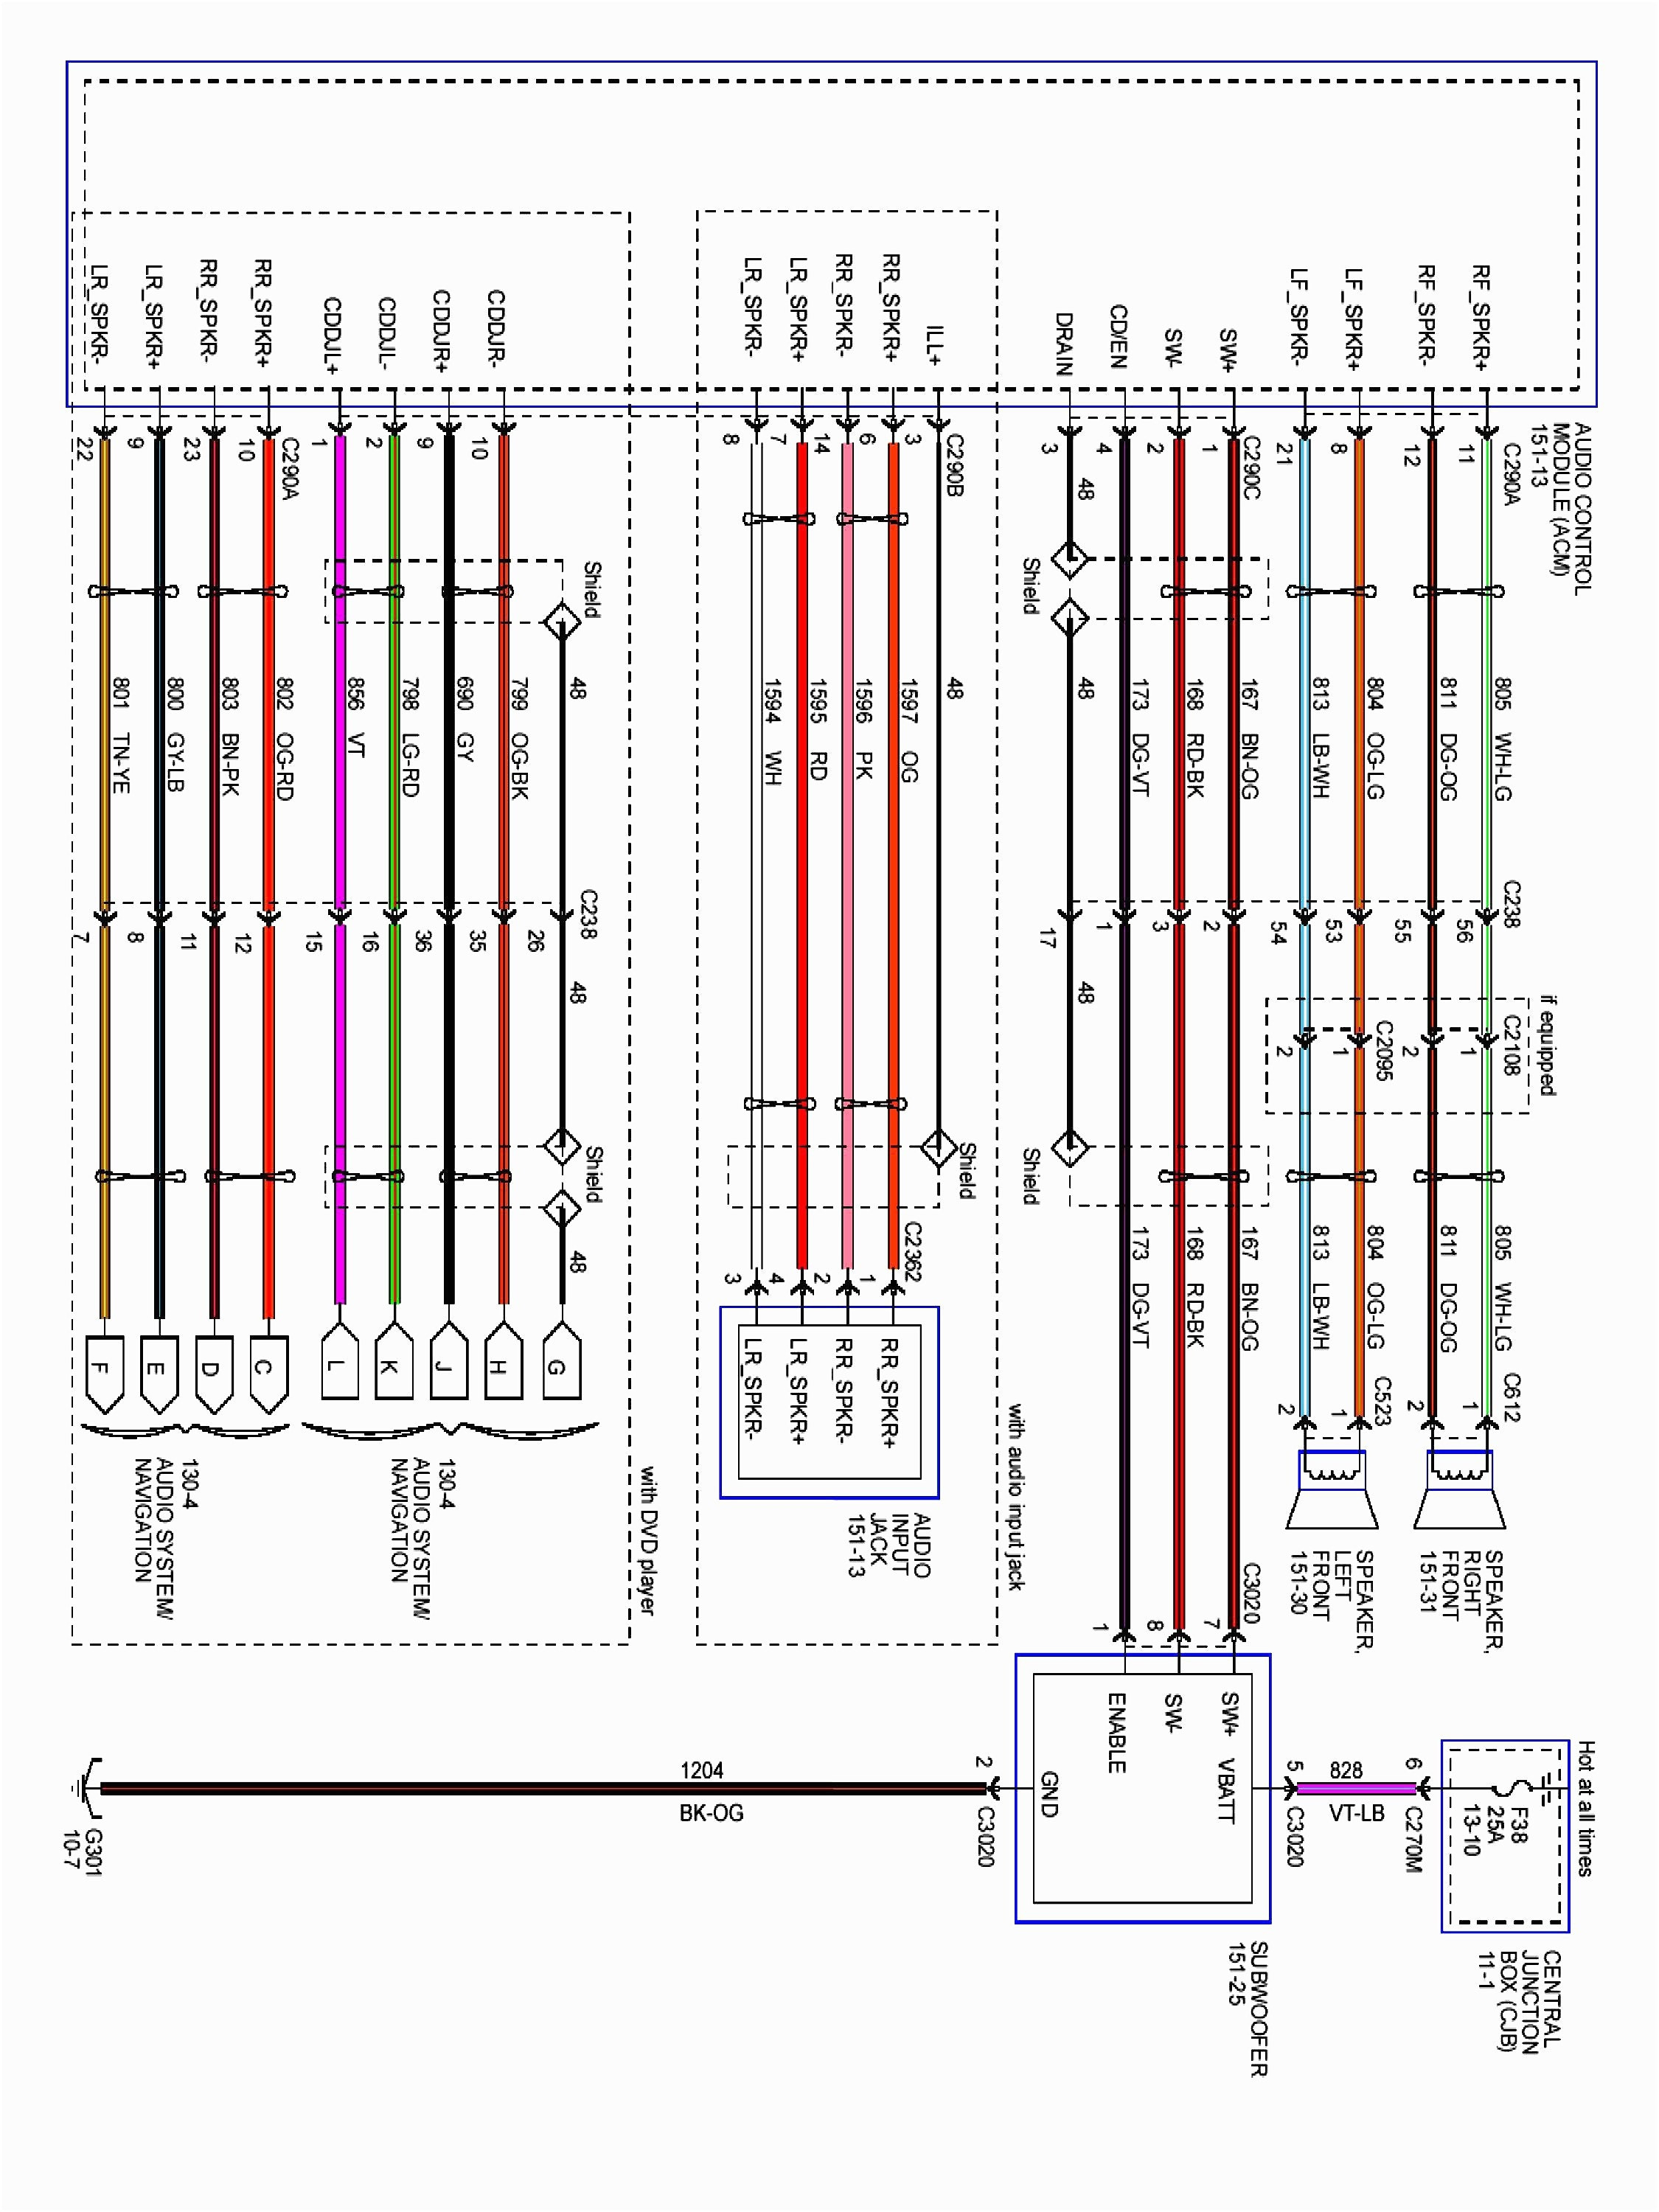 05 ford radio wiring diagram wiring diagram inside 2005 ford e150 wiring diagram